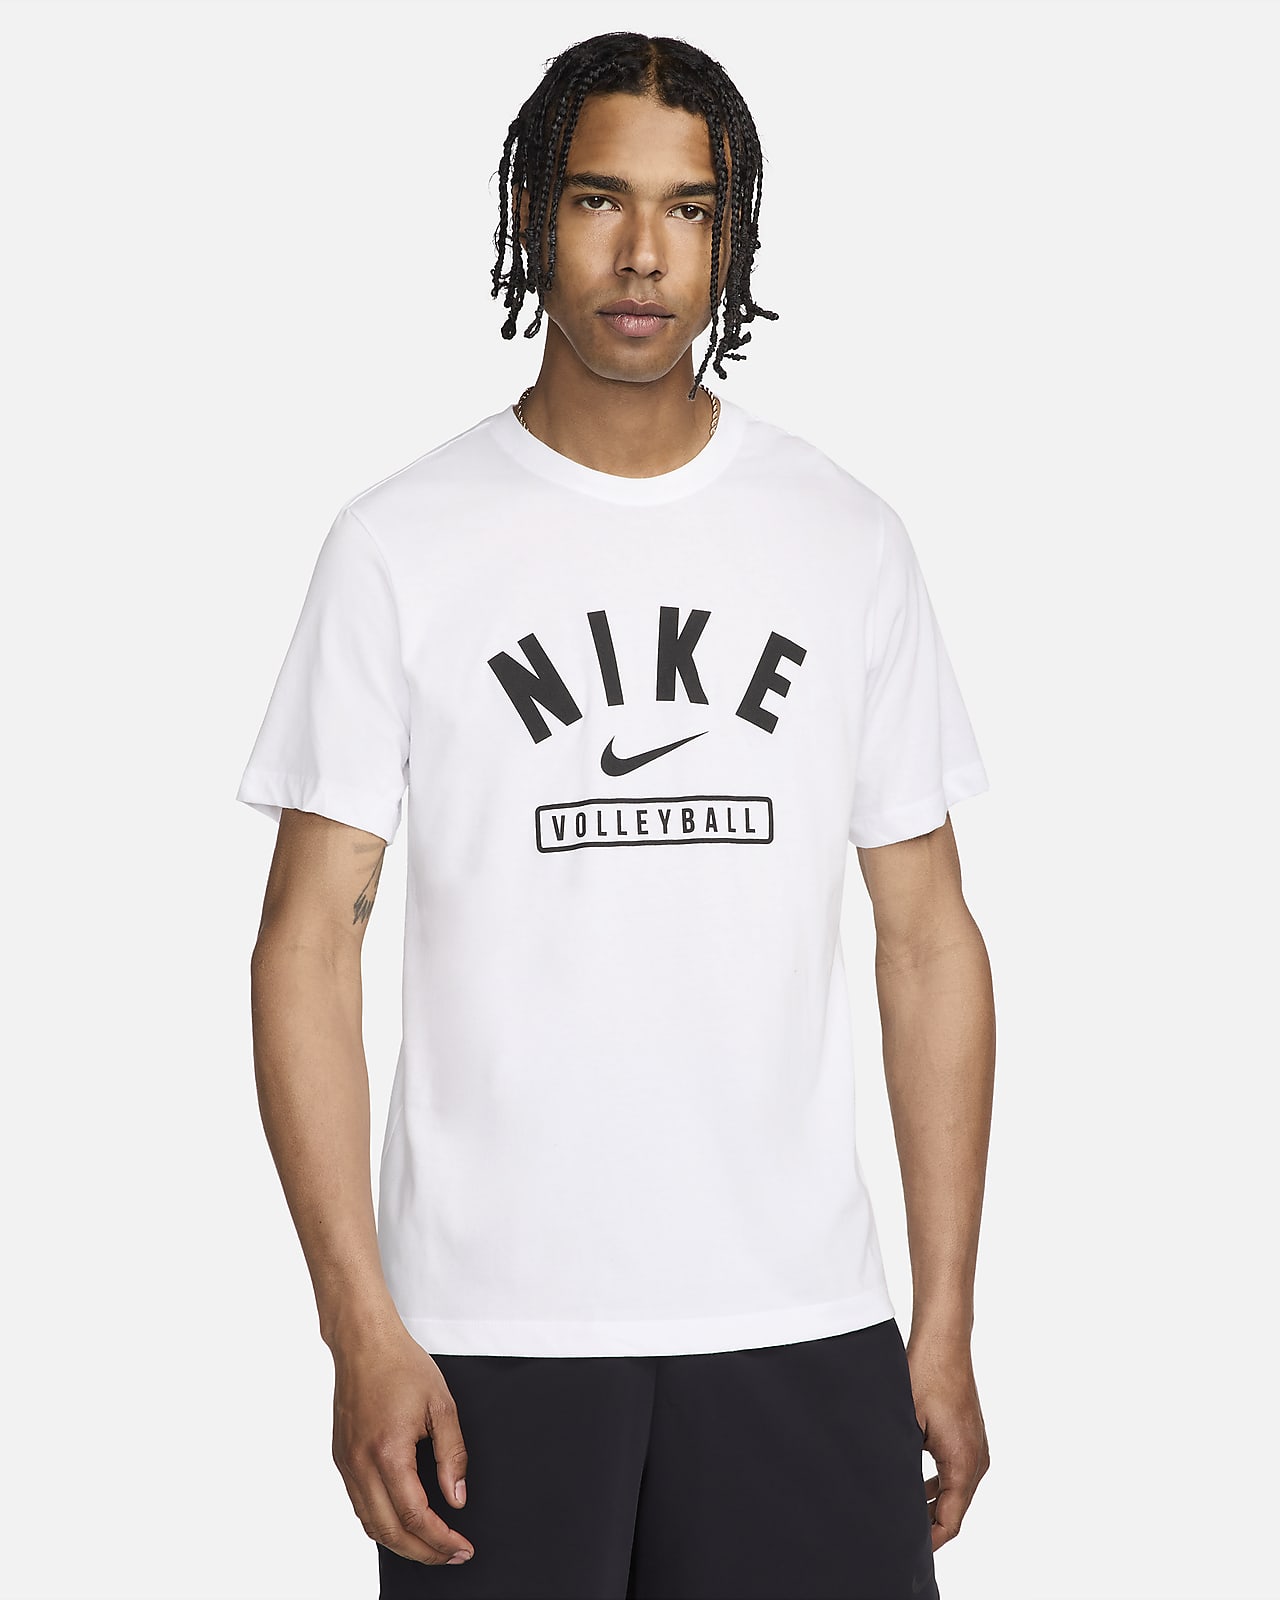 Nike Men's Volleyball T-Shirt